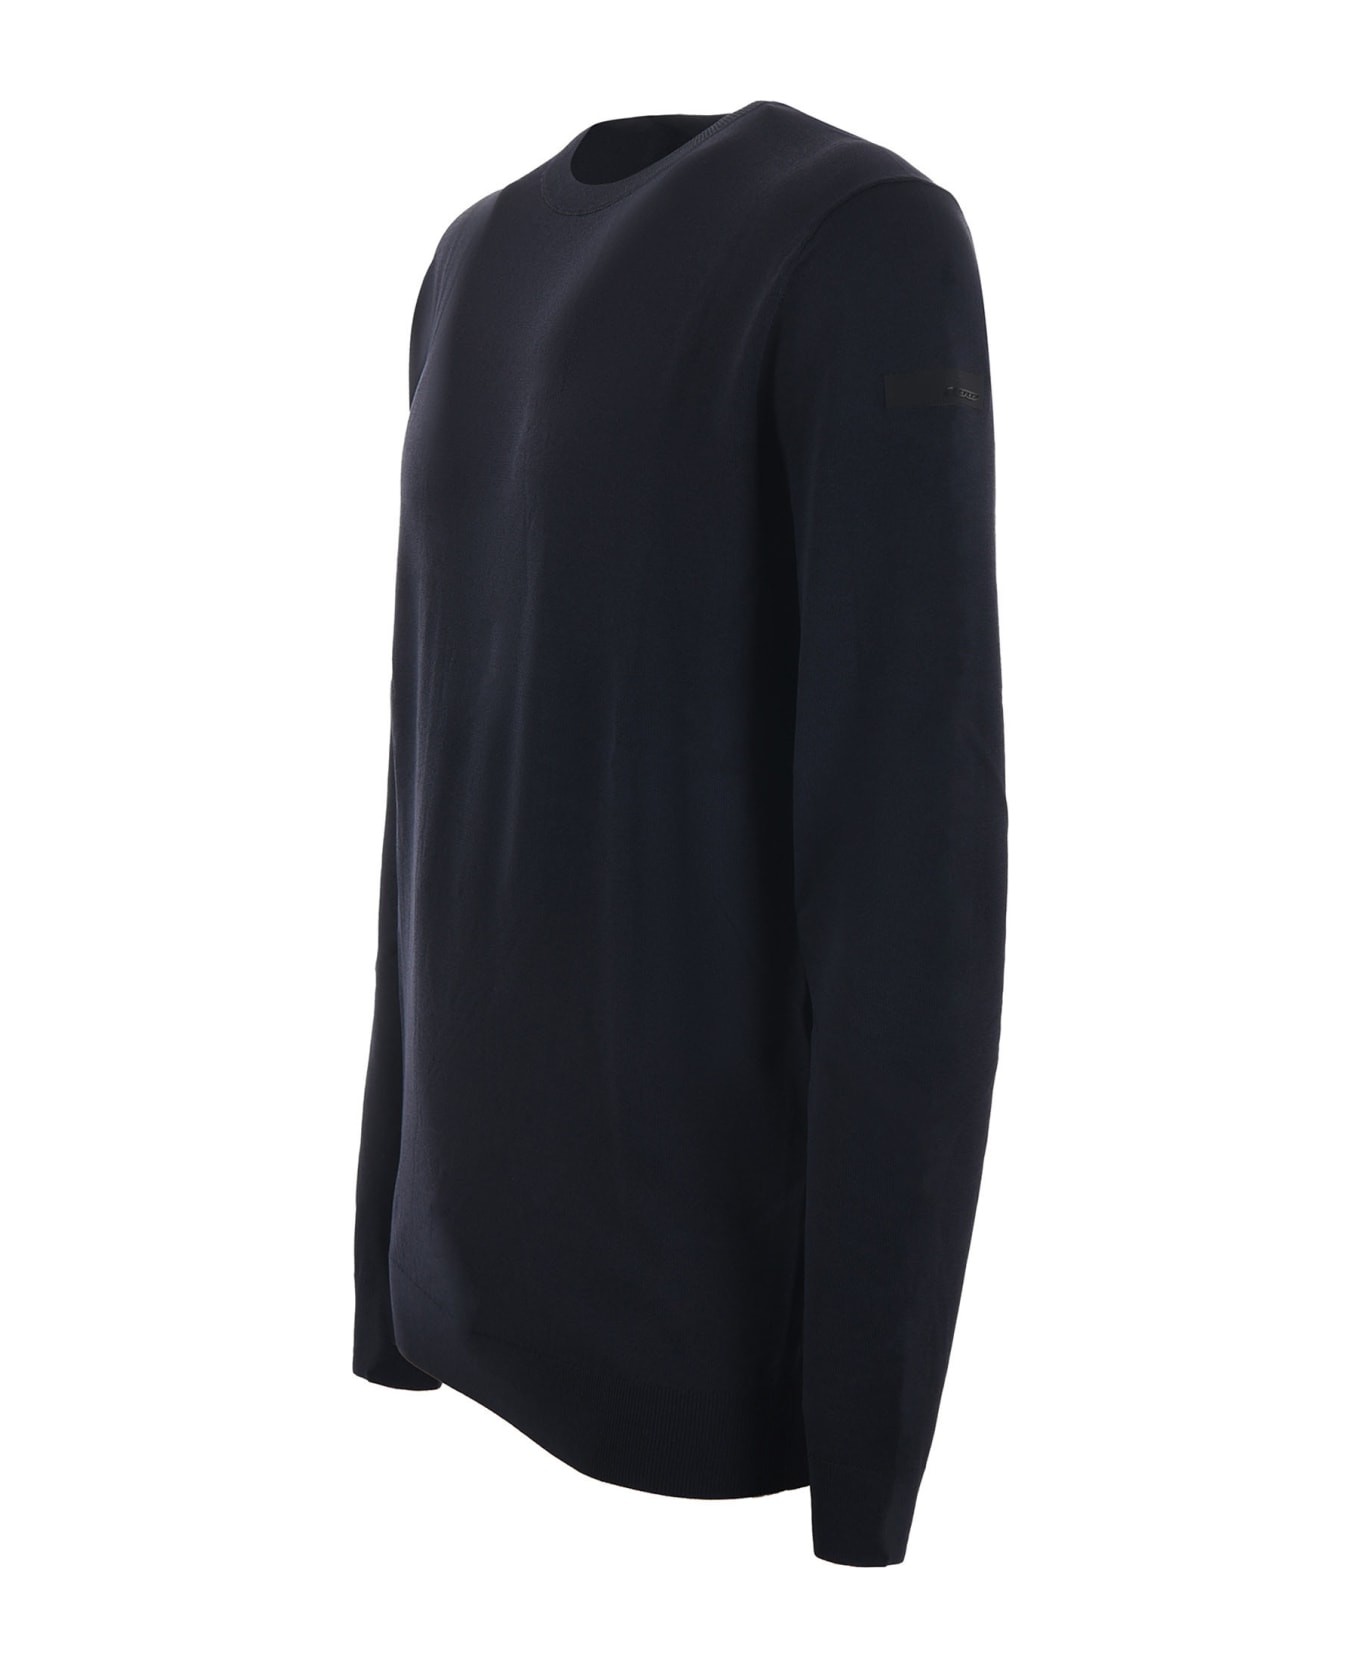 RRD - Roberto Ricci Design Rrd Sweater - Blu scuro